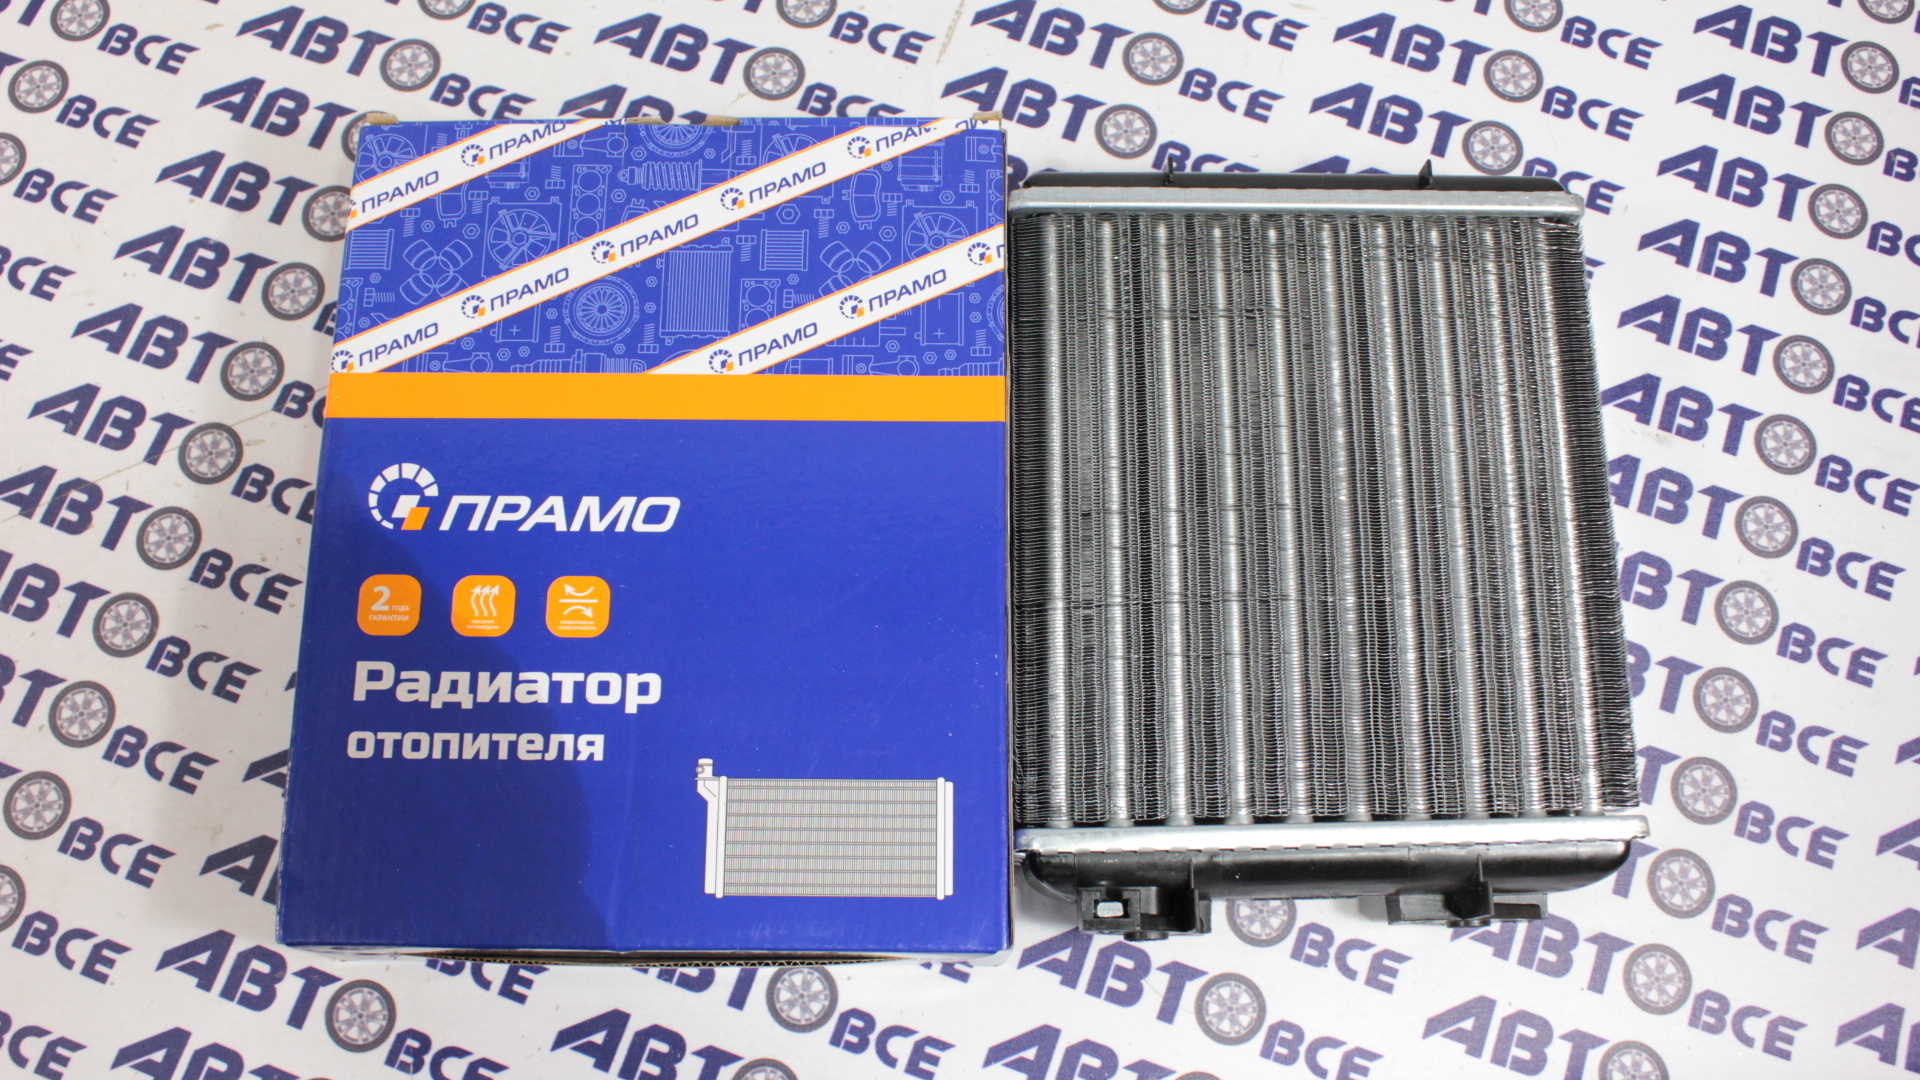 Радиатор отопителя (печки) ВАЗ-2105-2107 (алюминиевый-широкий) Прамо